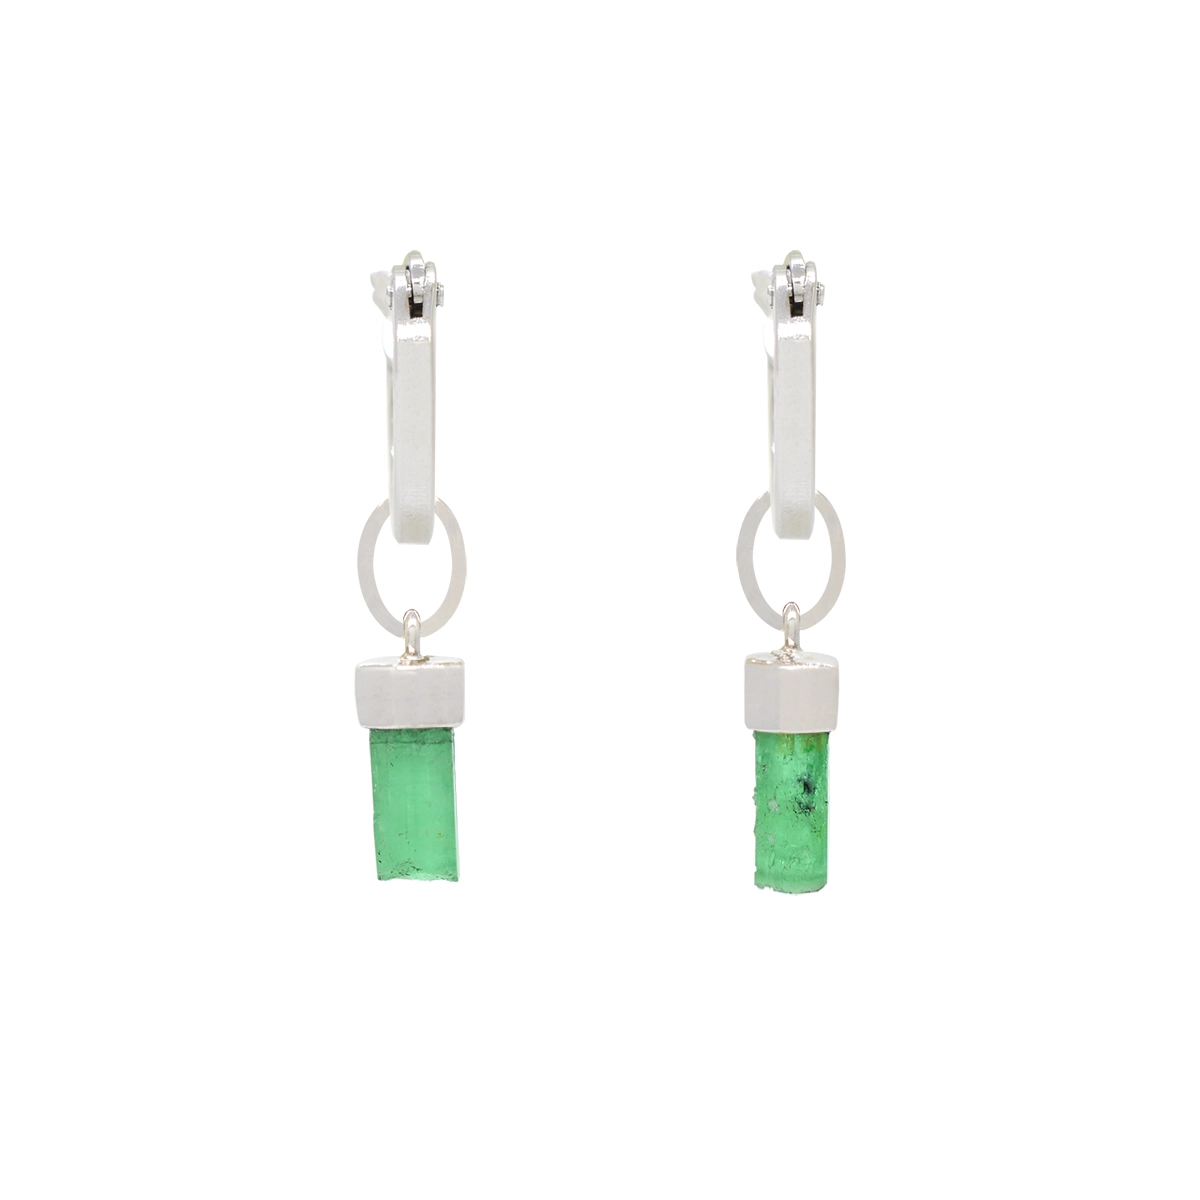 Uncut gemstones drop earrings with 2 uncut long green emeralds set in 18K white gold dangling earrings style front view